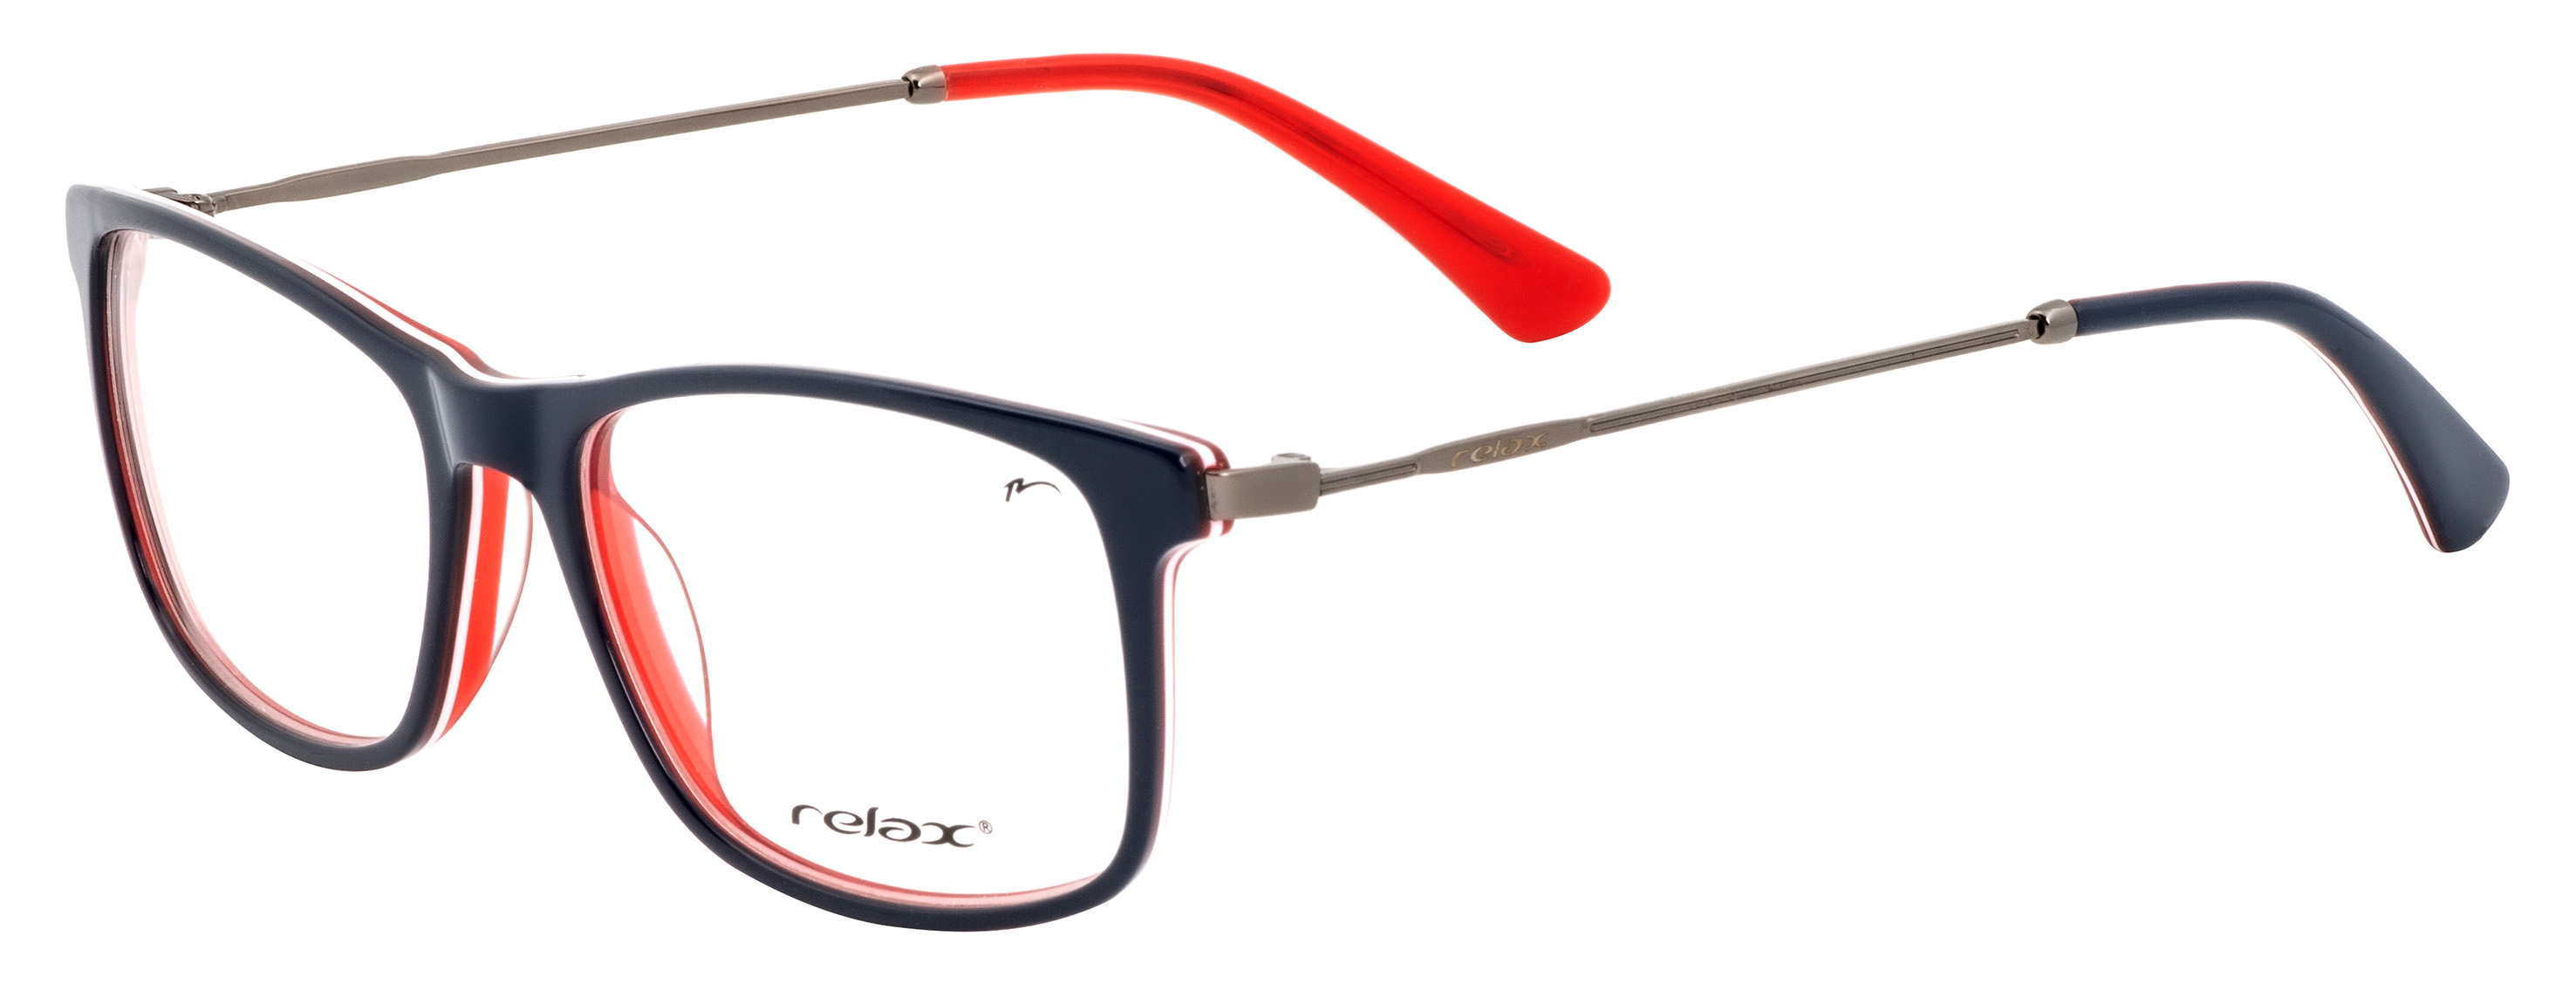 Dioptrické brýle Relax Stem RM119C1  -